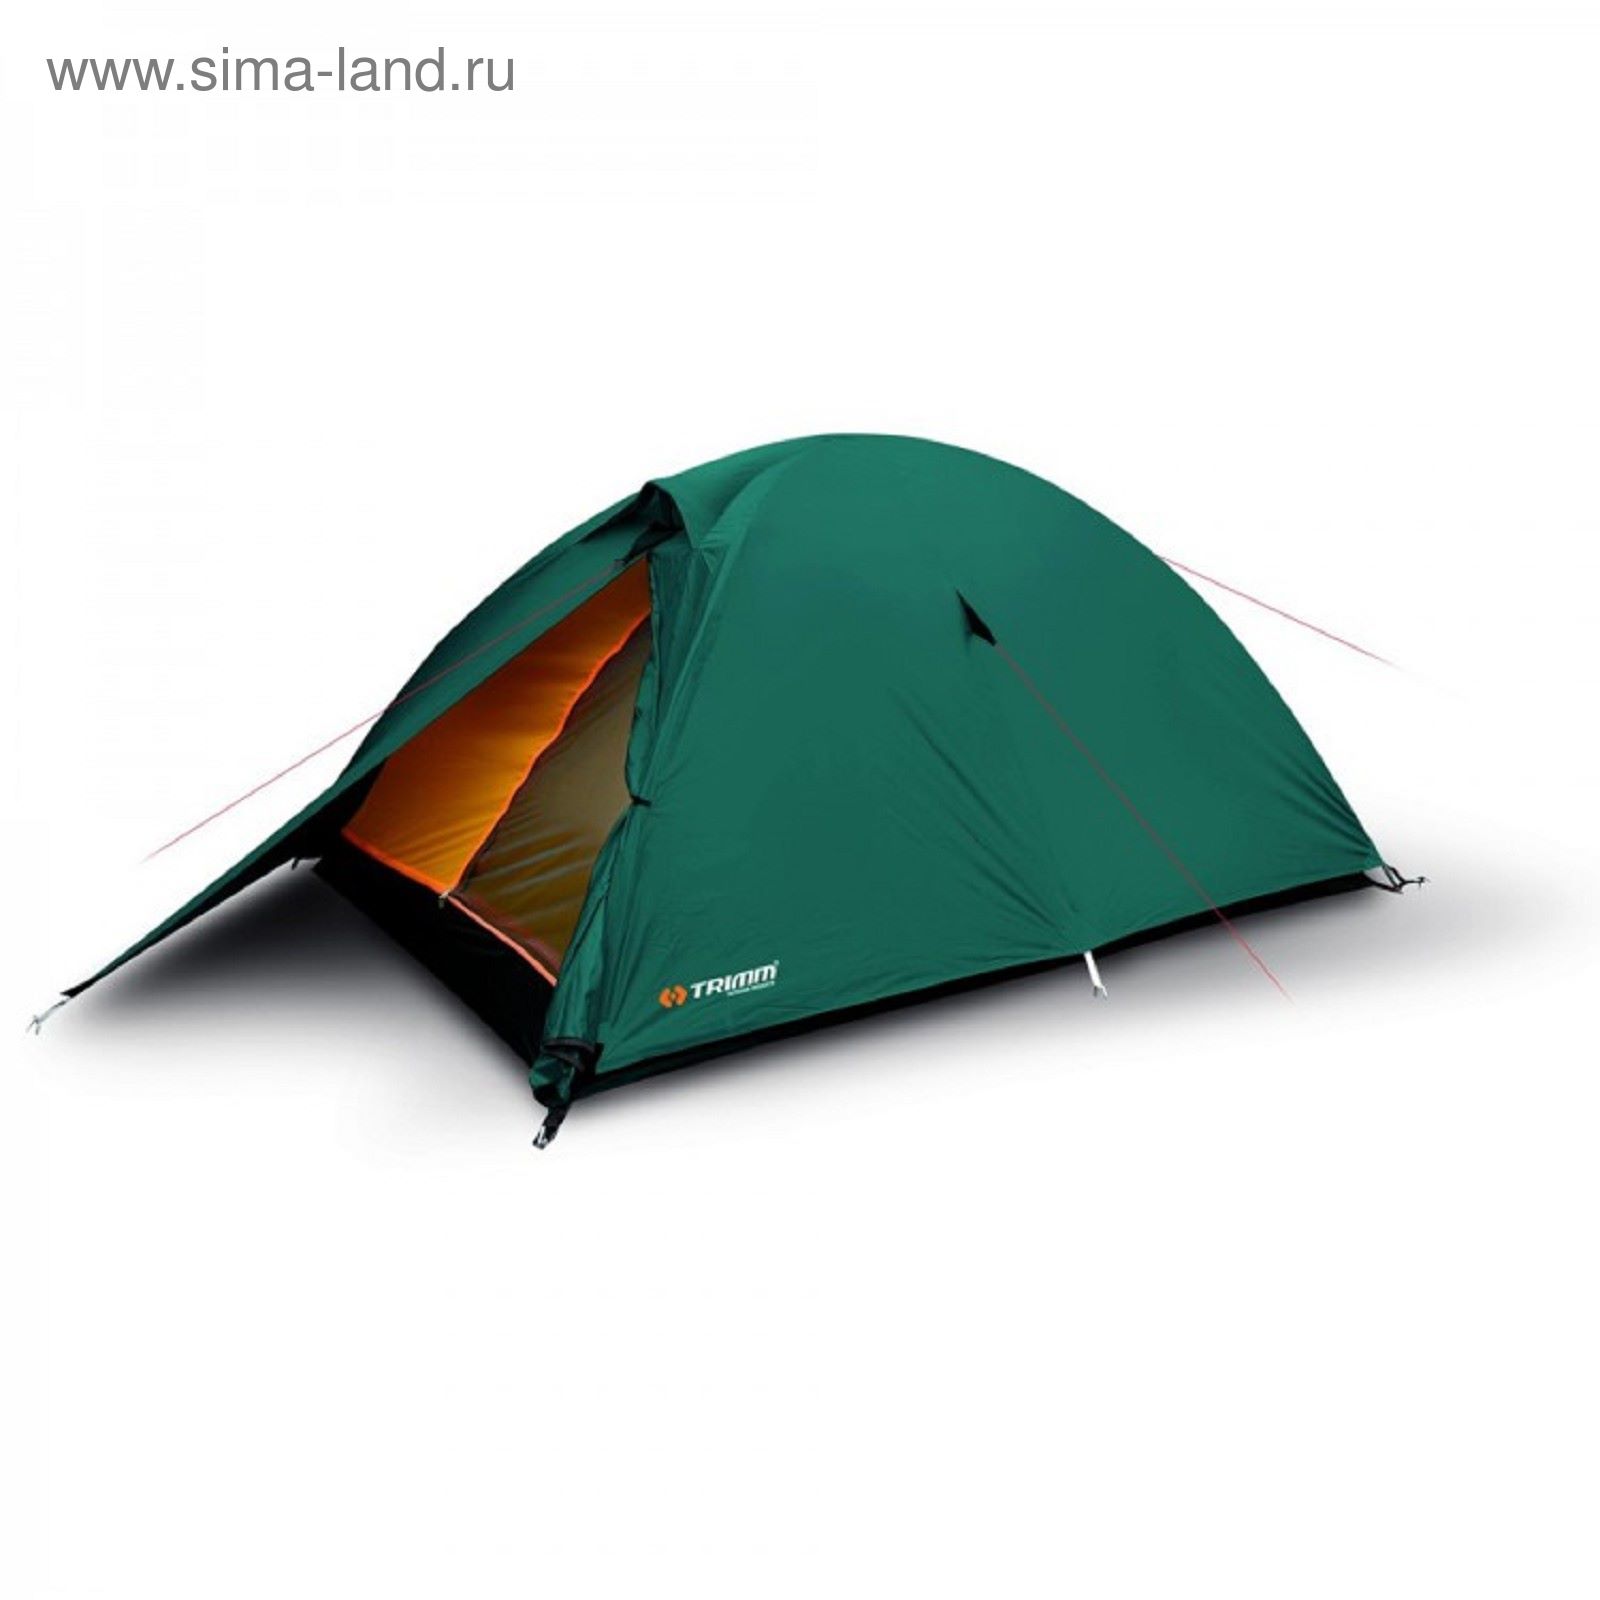 Палатка Trimm Outdoor Comet, размер 220(+90) х 150 х 110 см, цвет зеленый